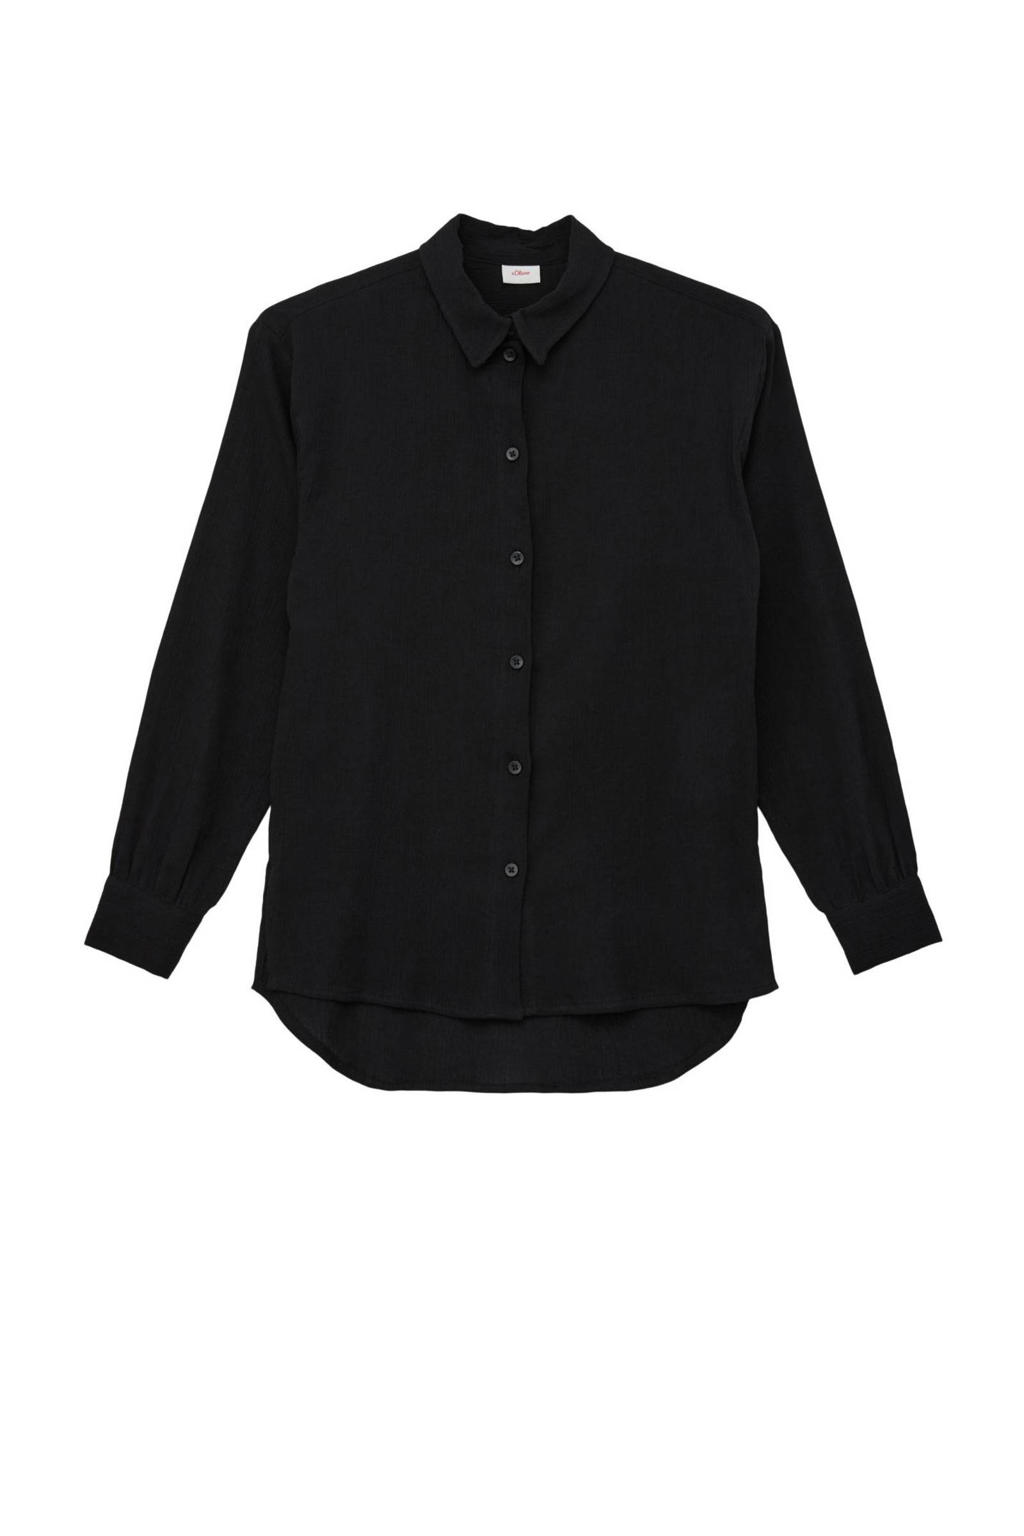 Zwarte meisjes s.Oliver blouse van katoen met lange mouwen, klassieke kraag en knoopsluiting